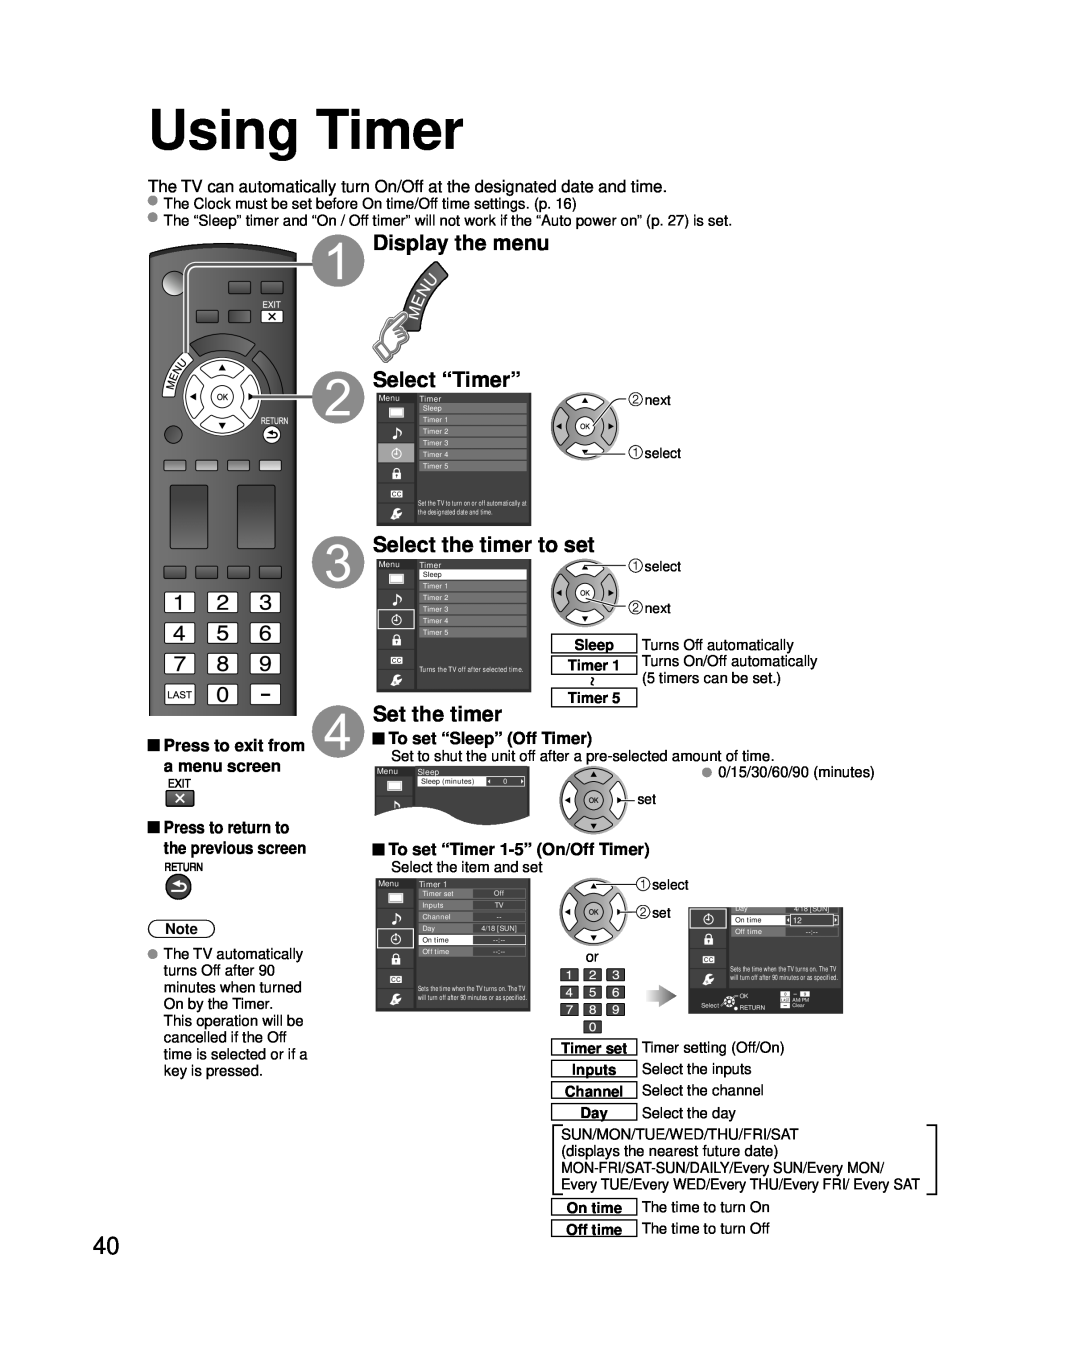 Panasonic TC-P42U2 Using Timer, Display the menu Select “Timer”, Select the timer to set, Set the timer, timers can be set 